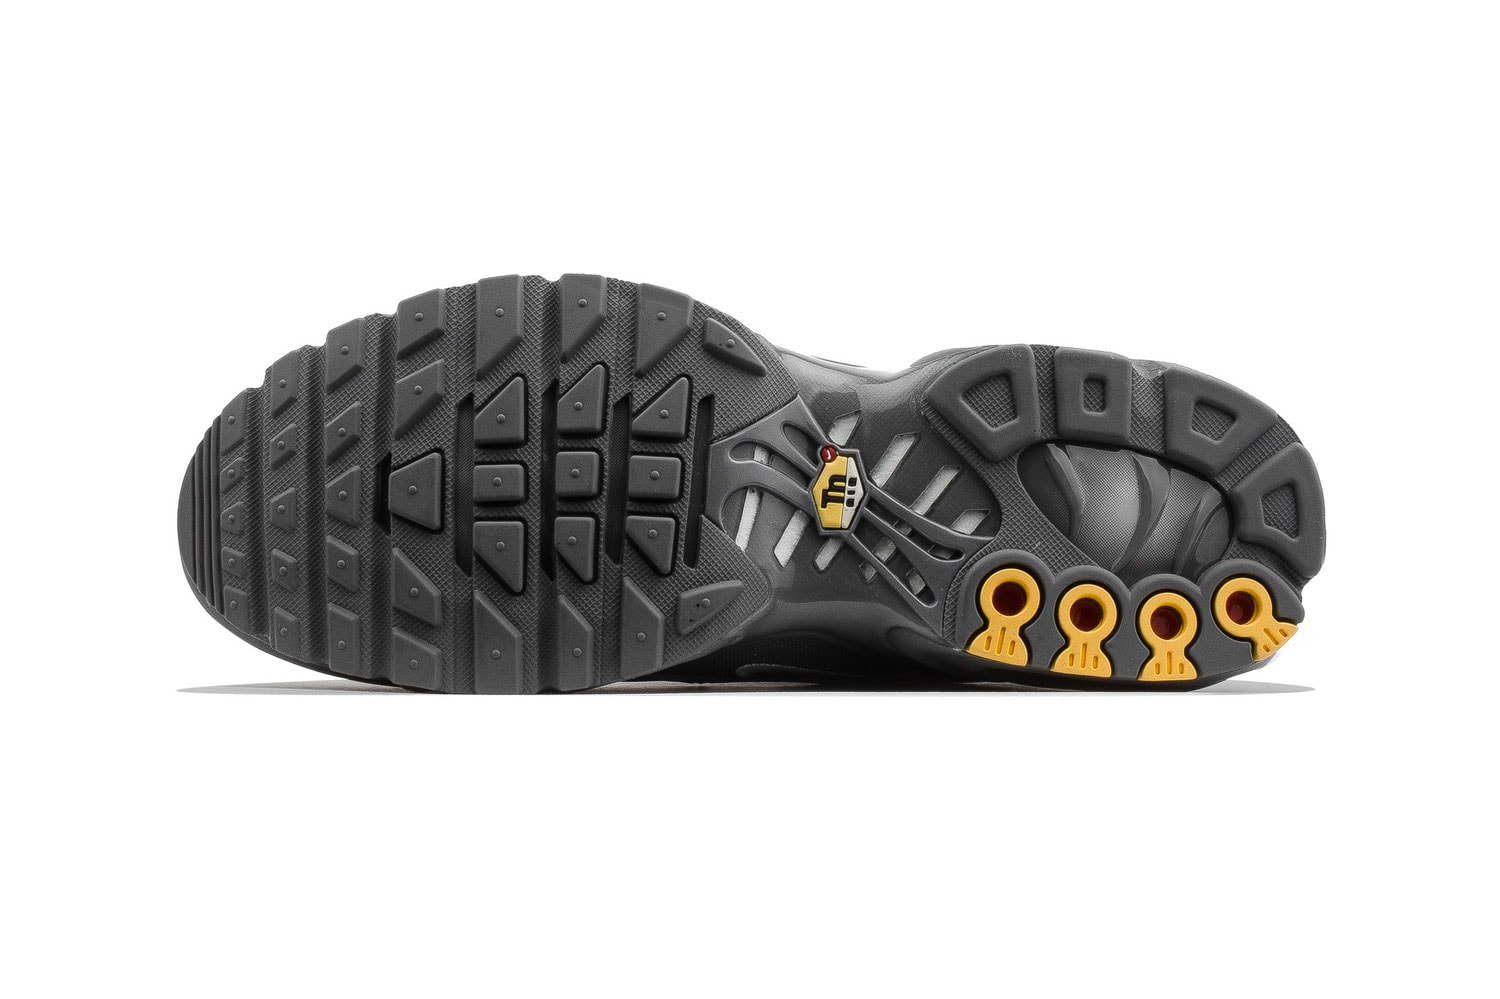 Nike Air Max Plus 97 "Cool Grey" Release Info date price colorway sneaker purchase buy online capsule 